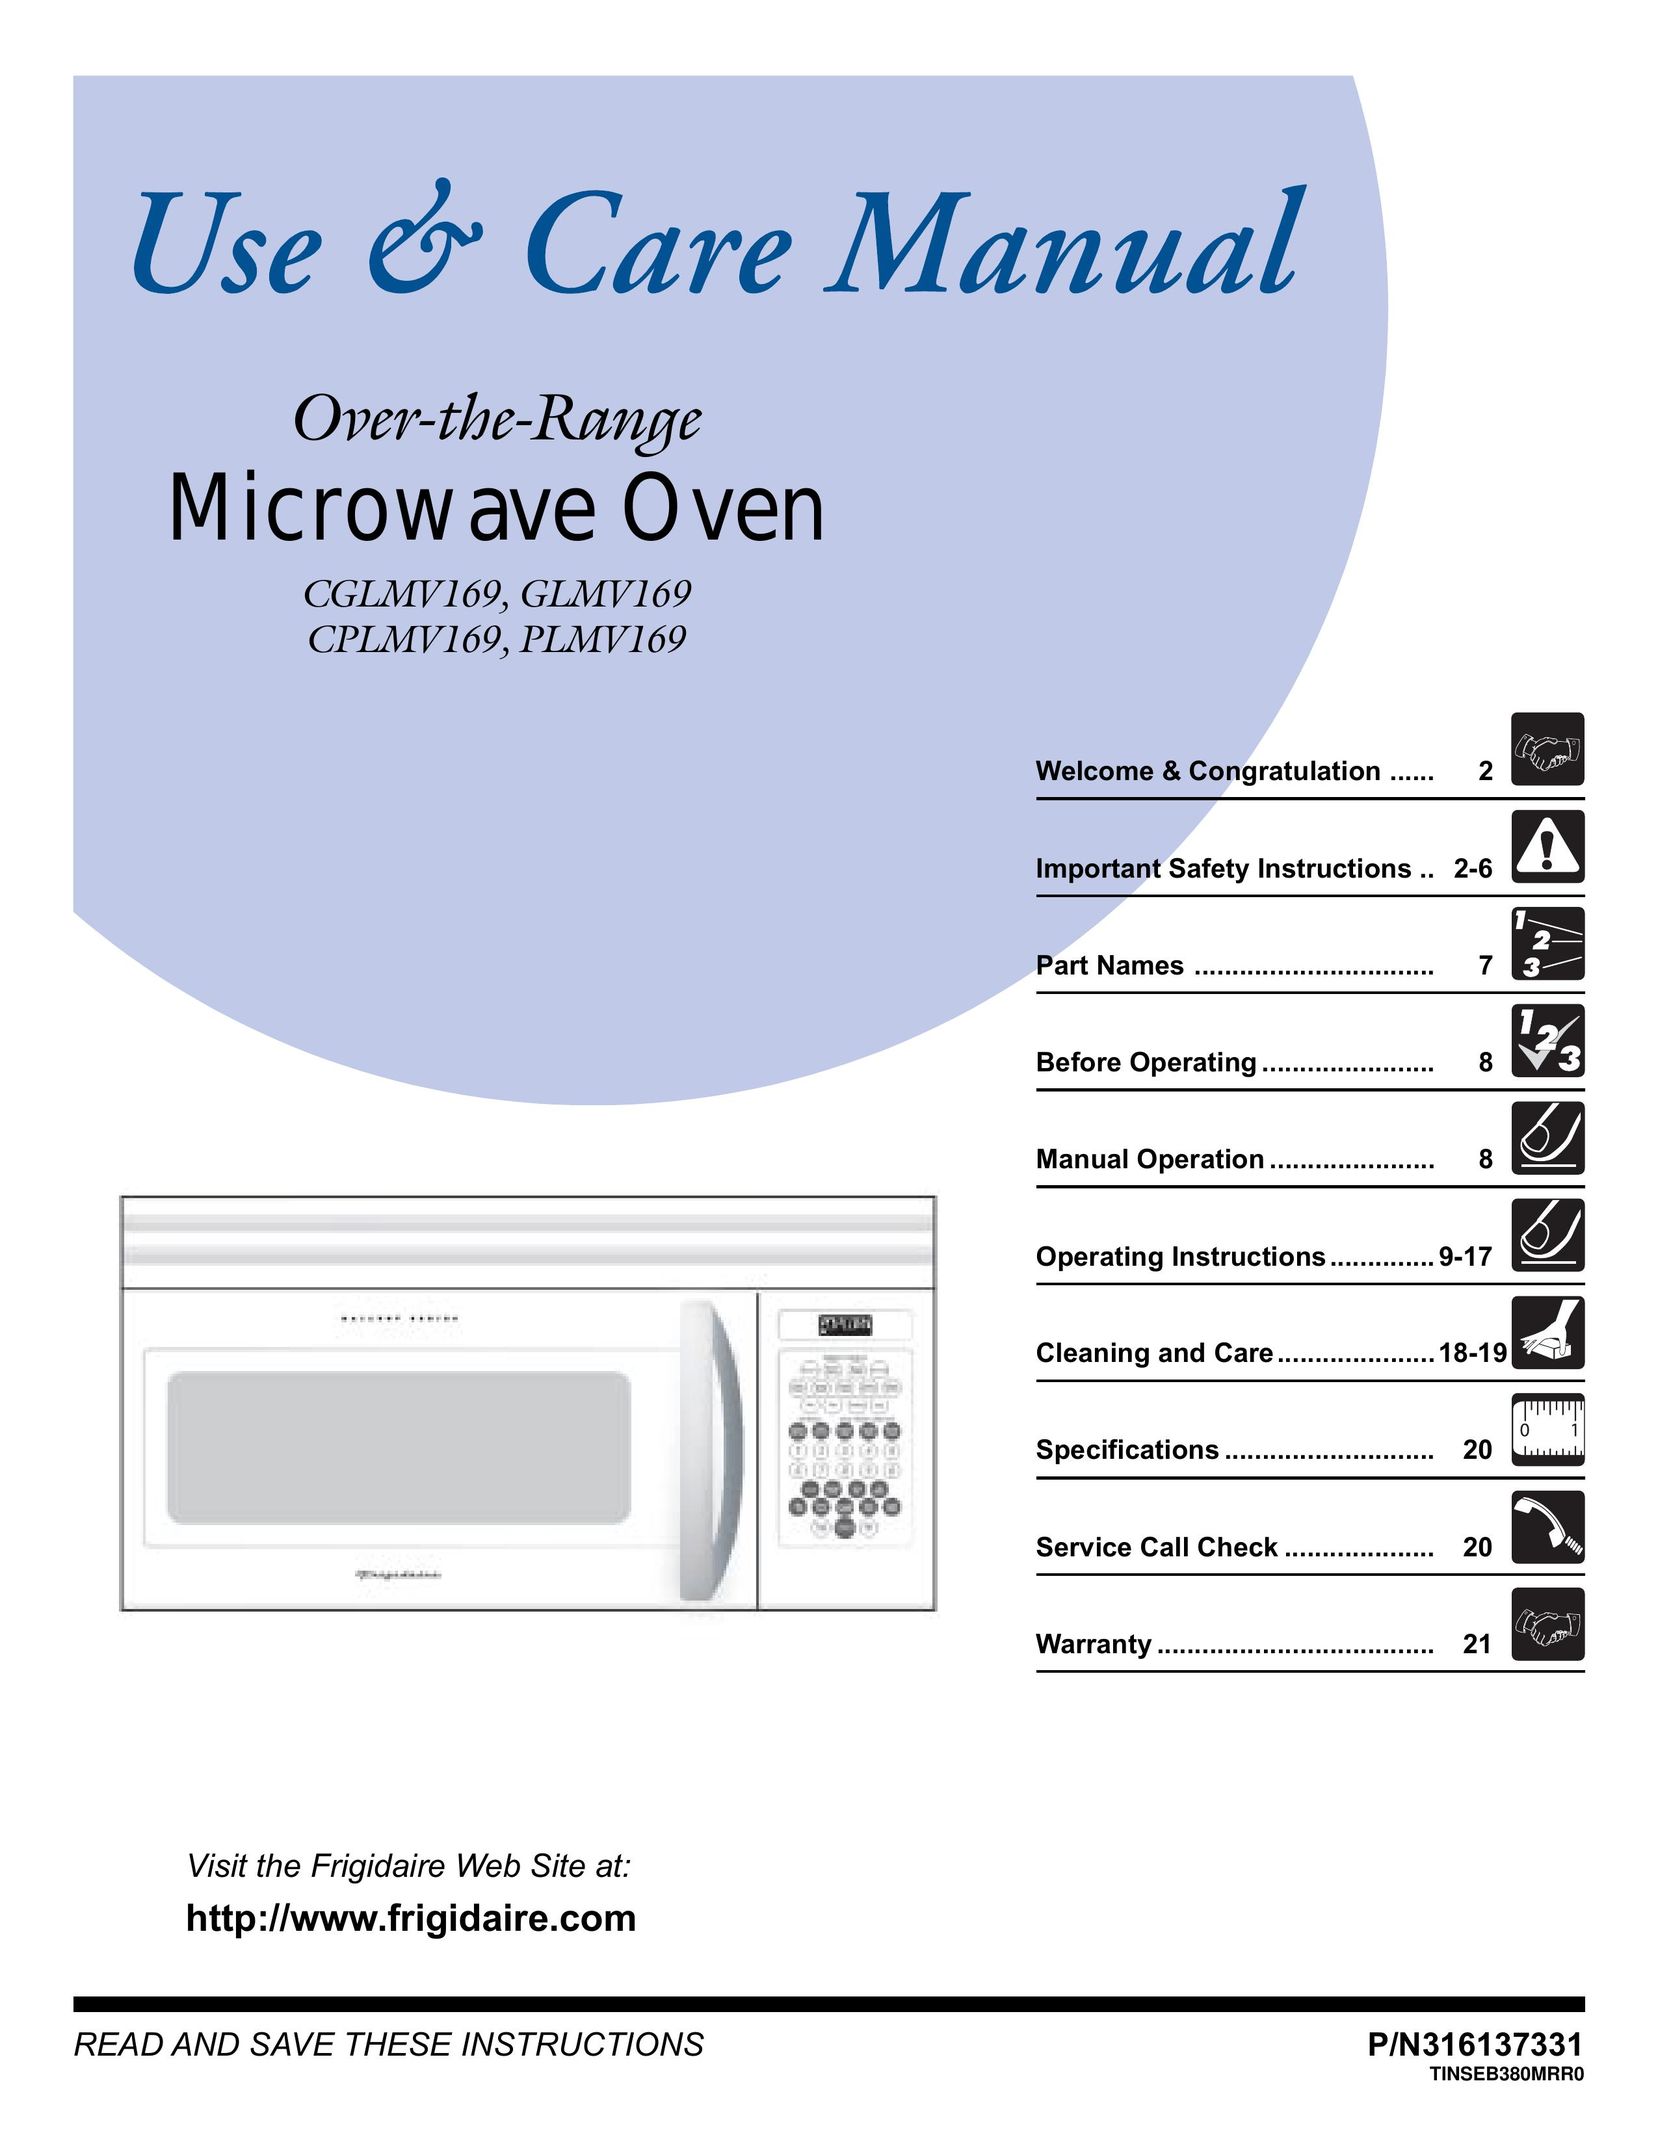 Frigidaire CGLMV169 Microwave Oven User Manual